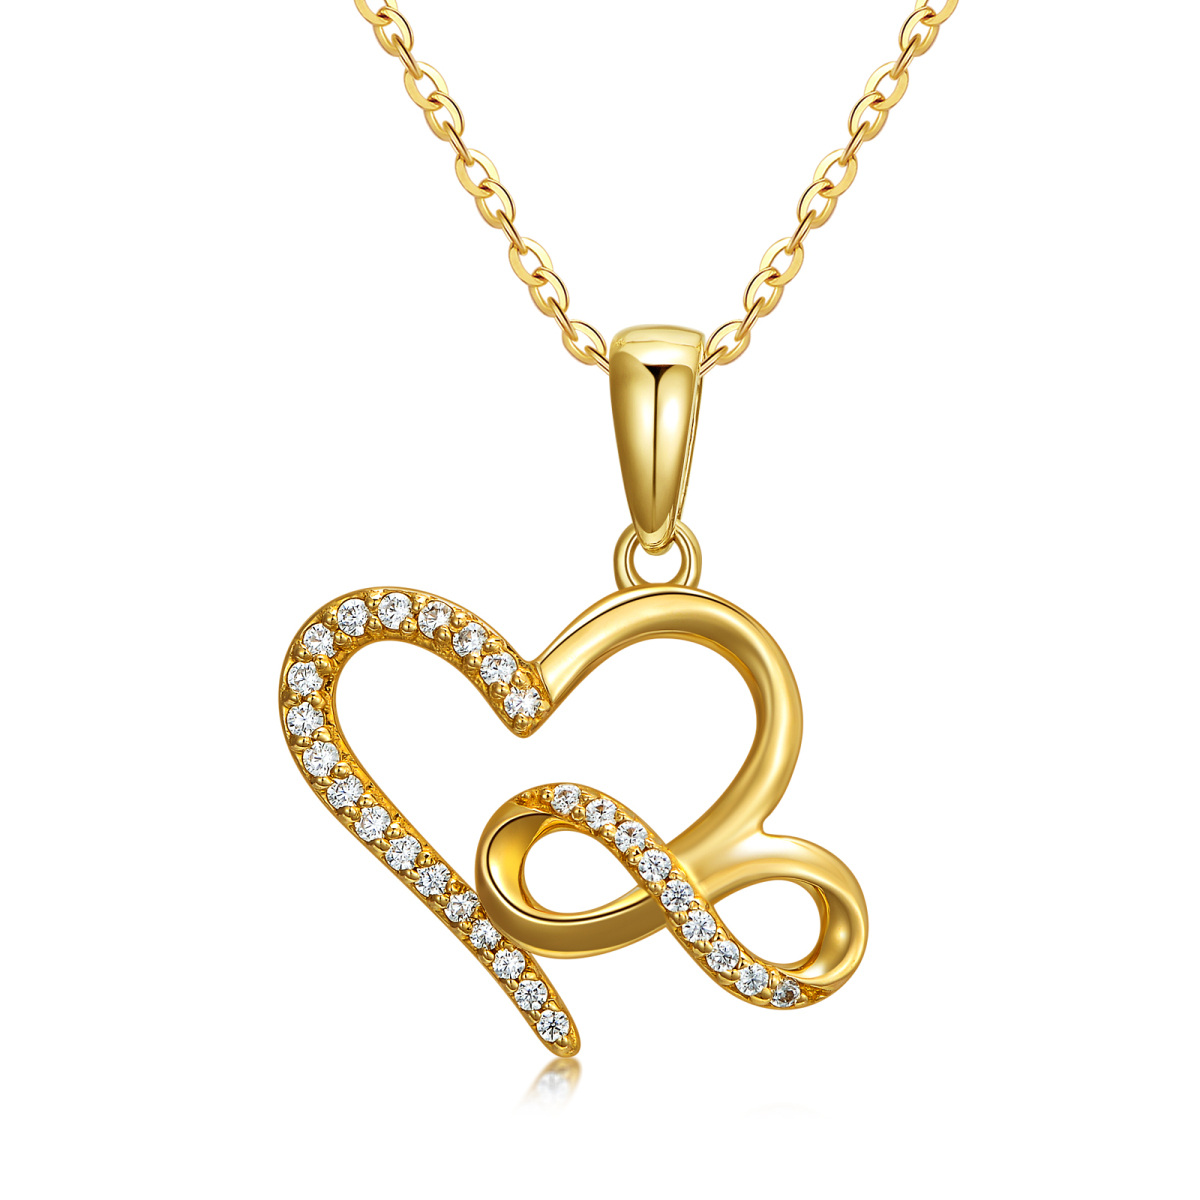 Collier en or 14K avec pendentif circulaire en zircon cubique en forme de coeur et symbole-1